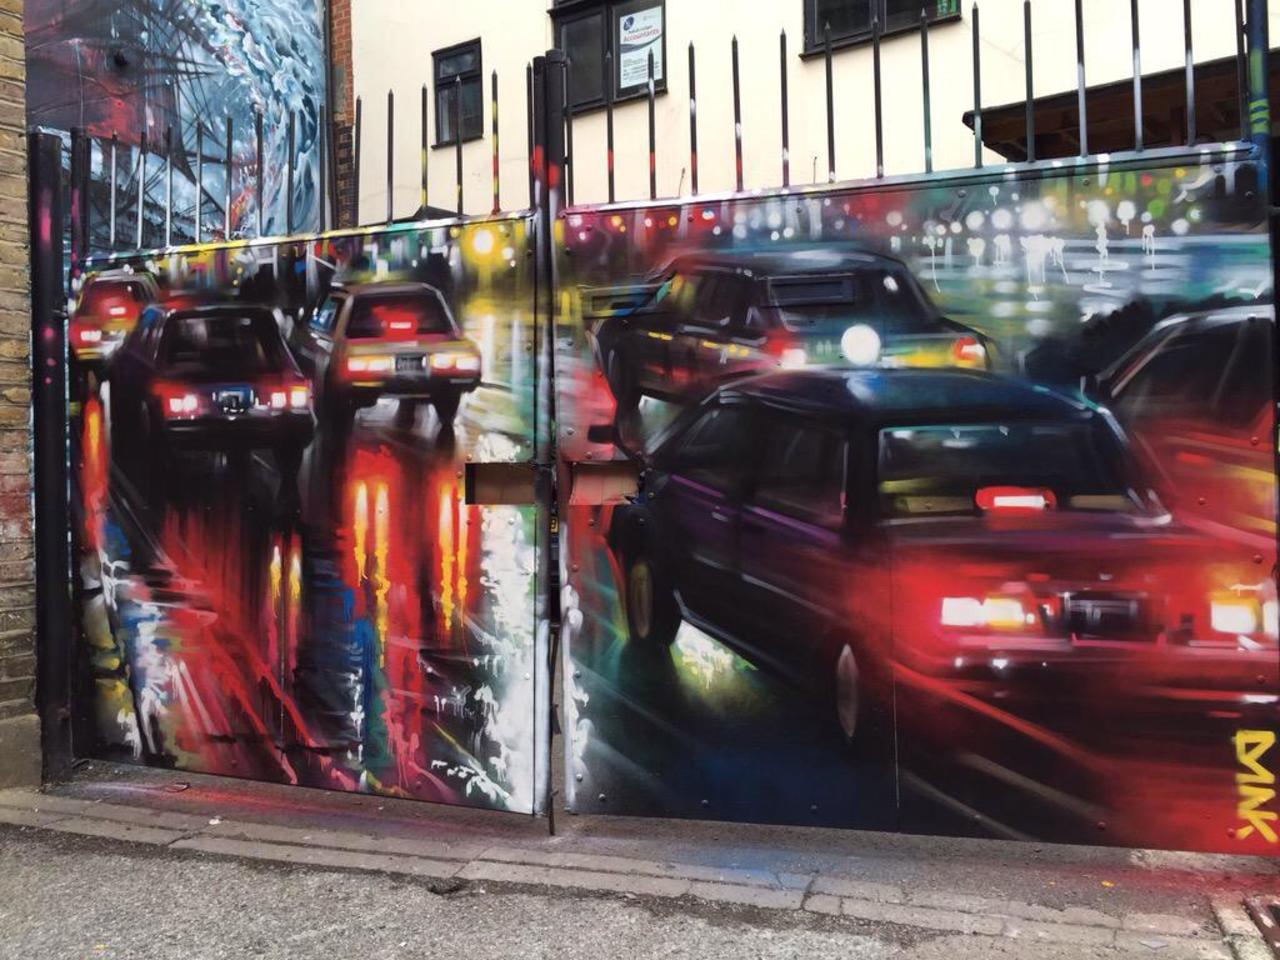 New Street Art by DanKitchener in Brick Lane London 

#art #graffiti #mural #streetart http://t.co/zYq7PBEvhH